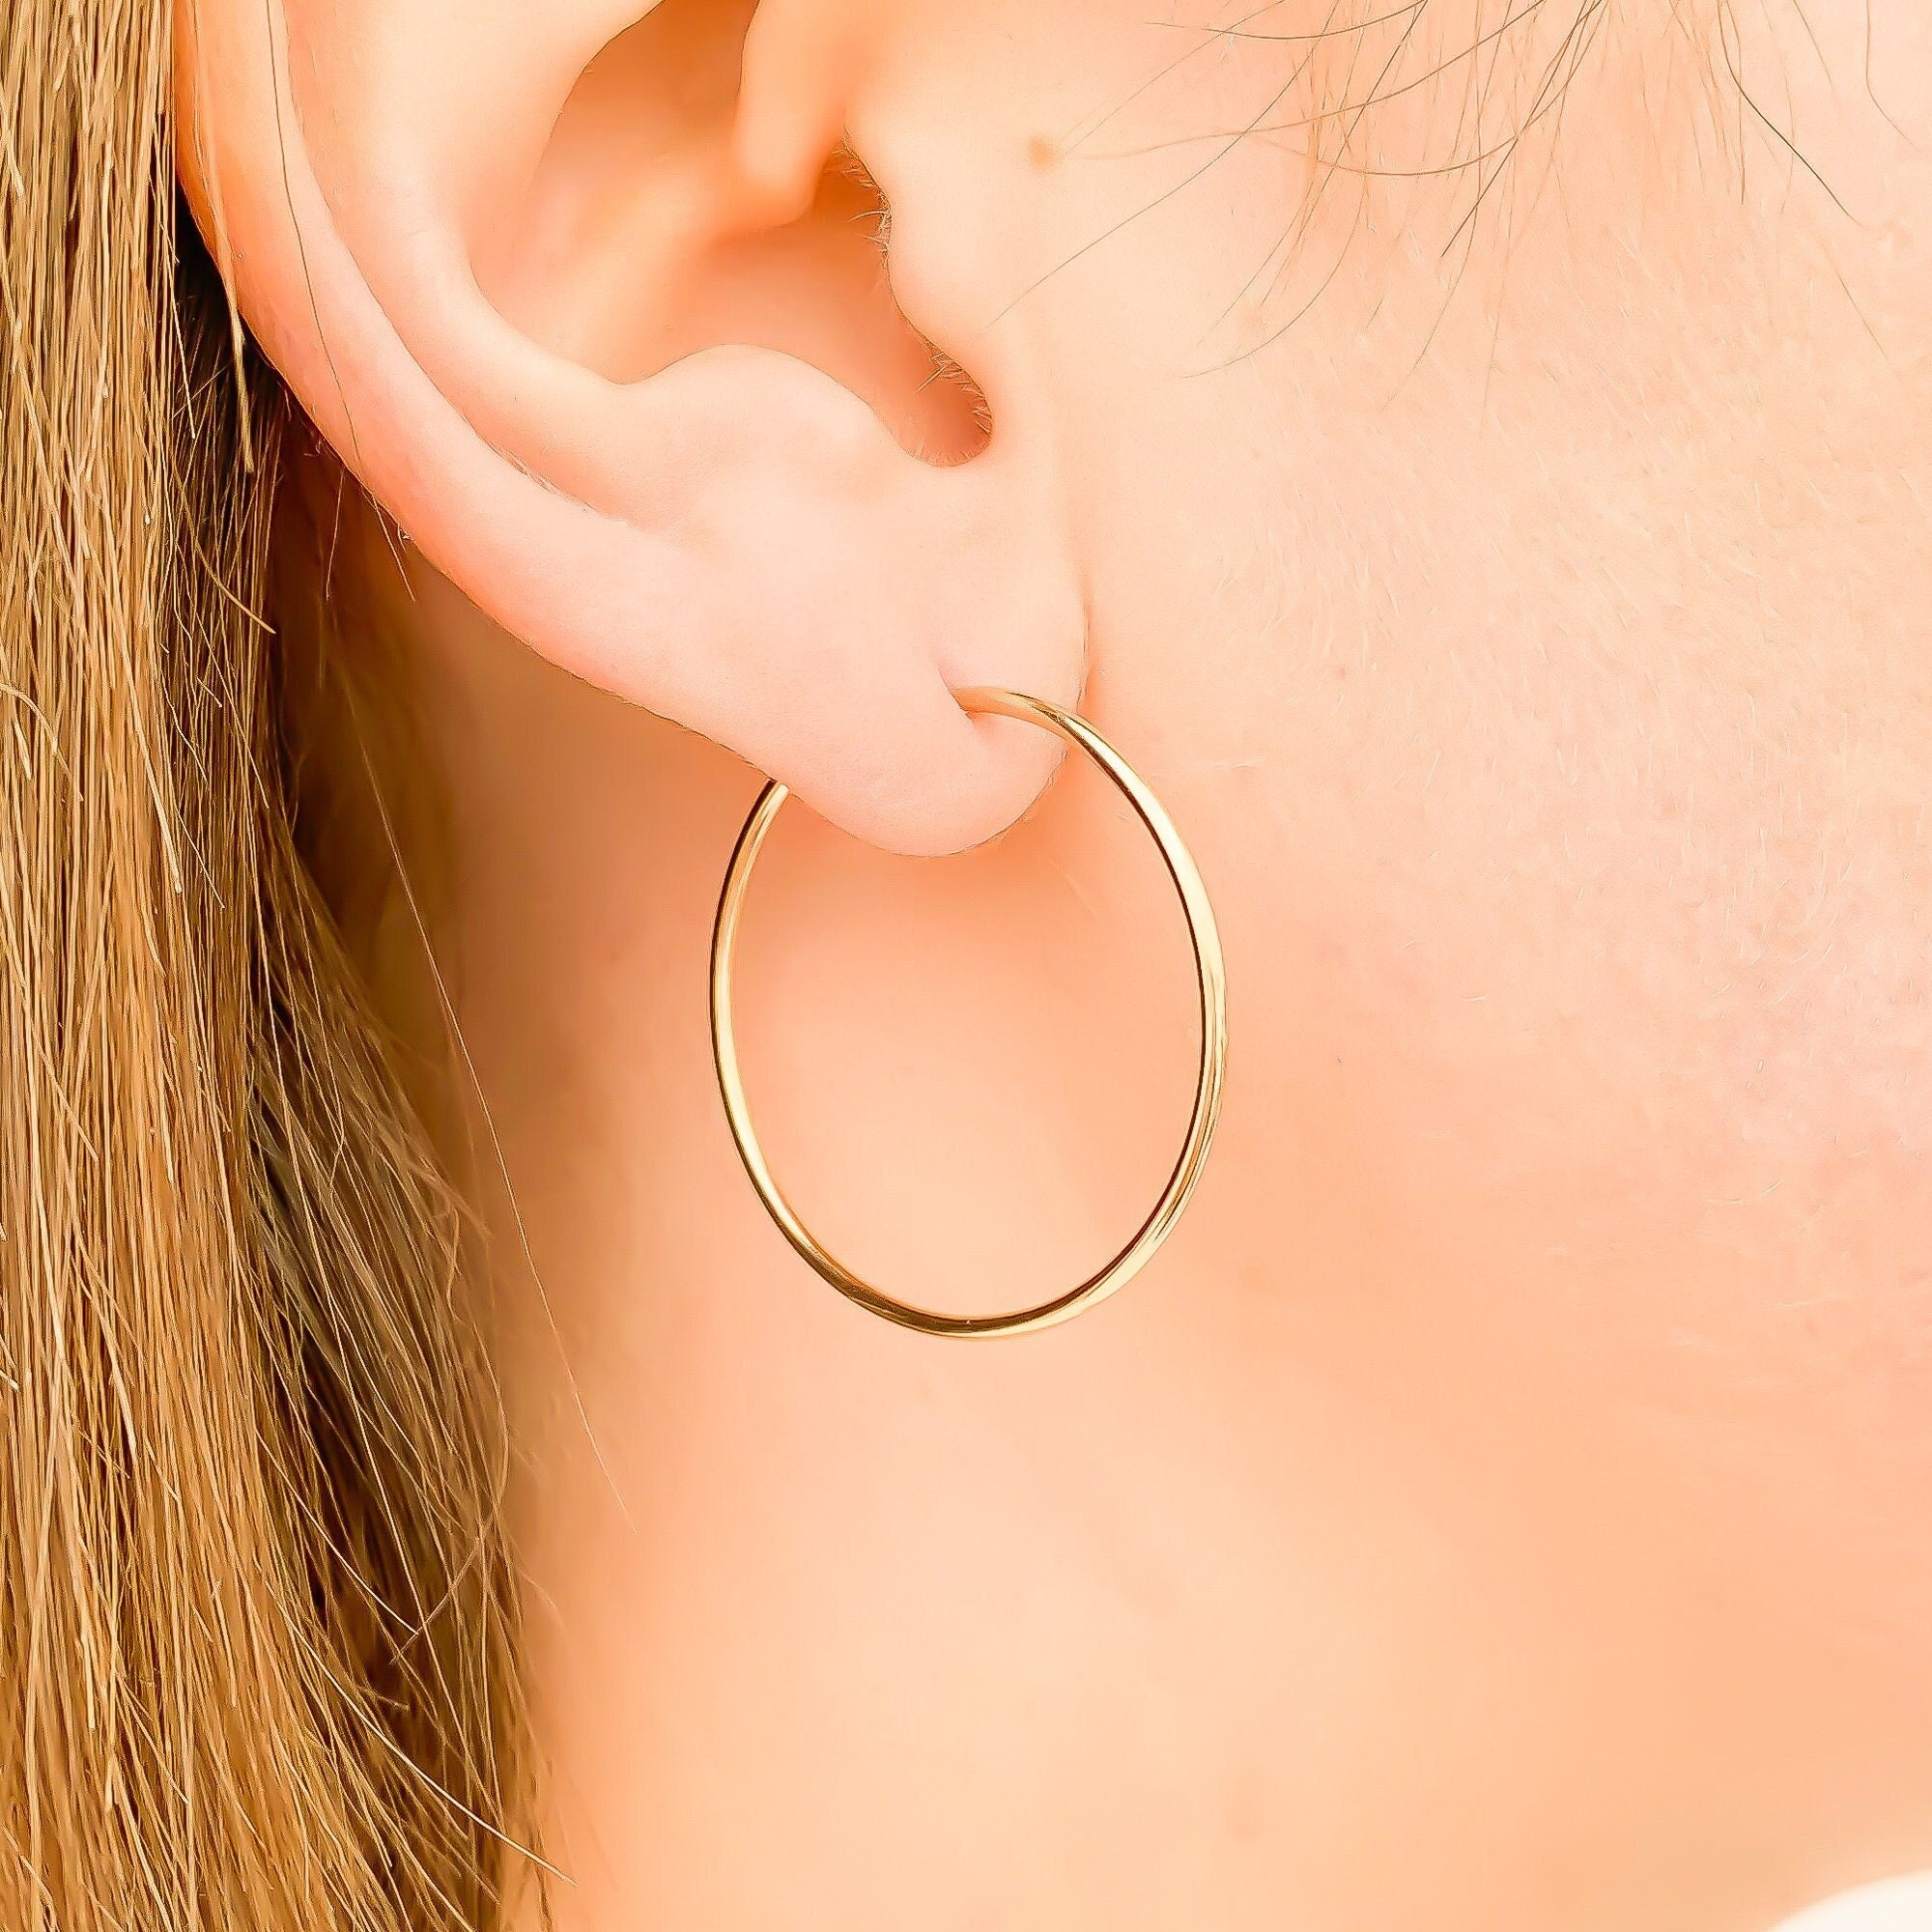 Wired Earrings Clip-On Hoop Earrings-Ear Gauge Accessory-Hoop Earring Layers-Layered Gold Hoops Gold Hoops-Large Gold Hoops-Wired Jewelry